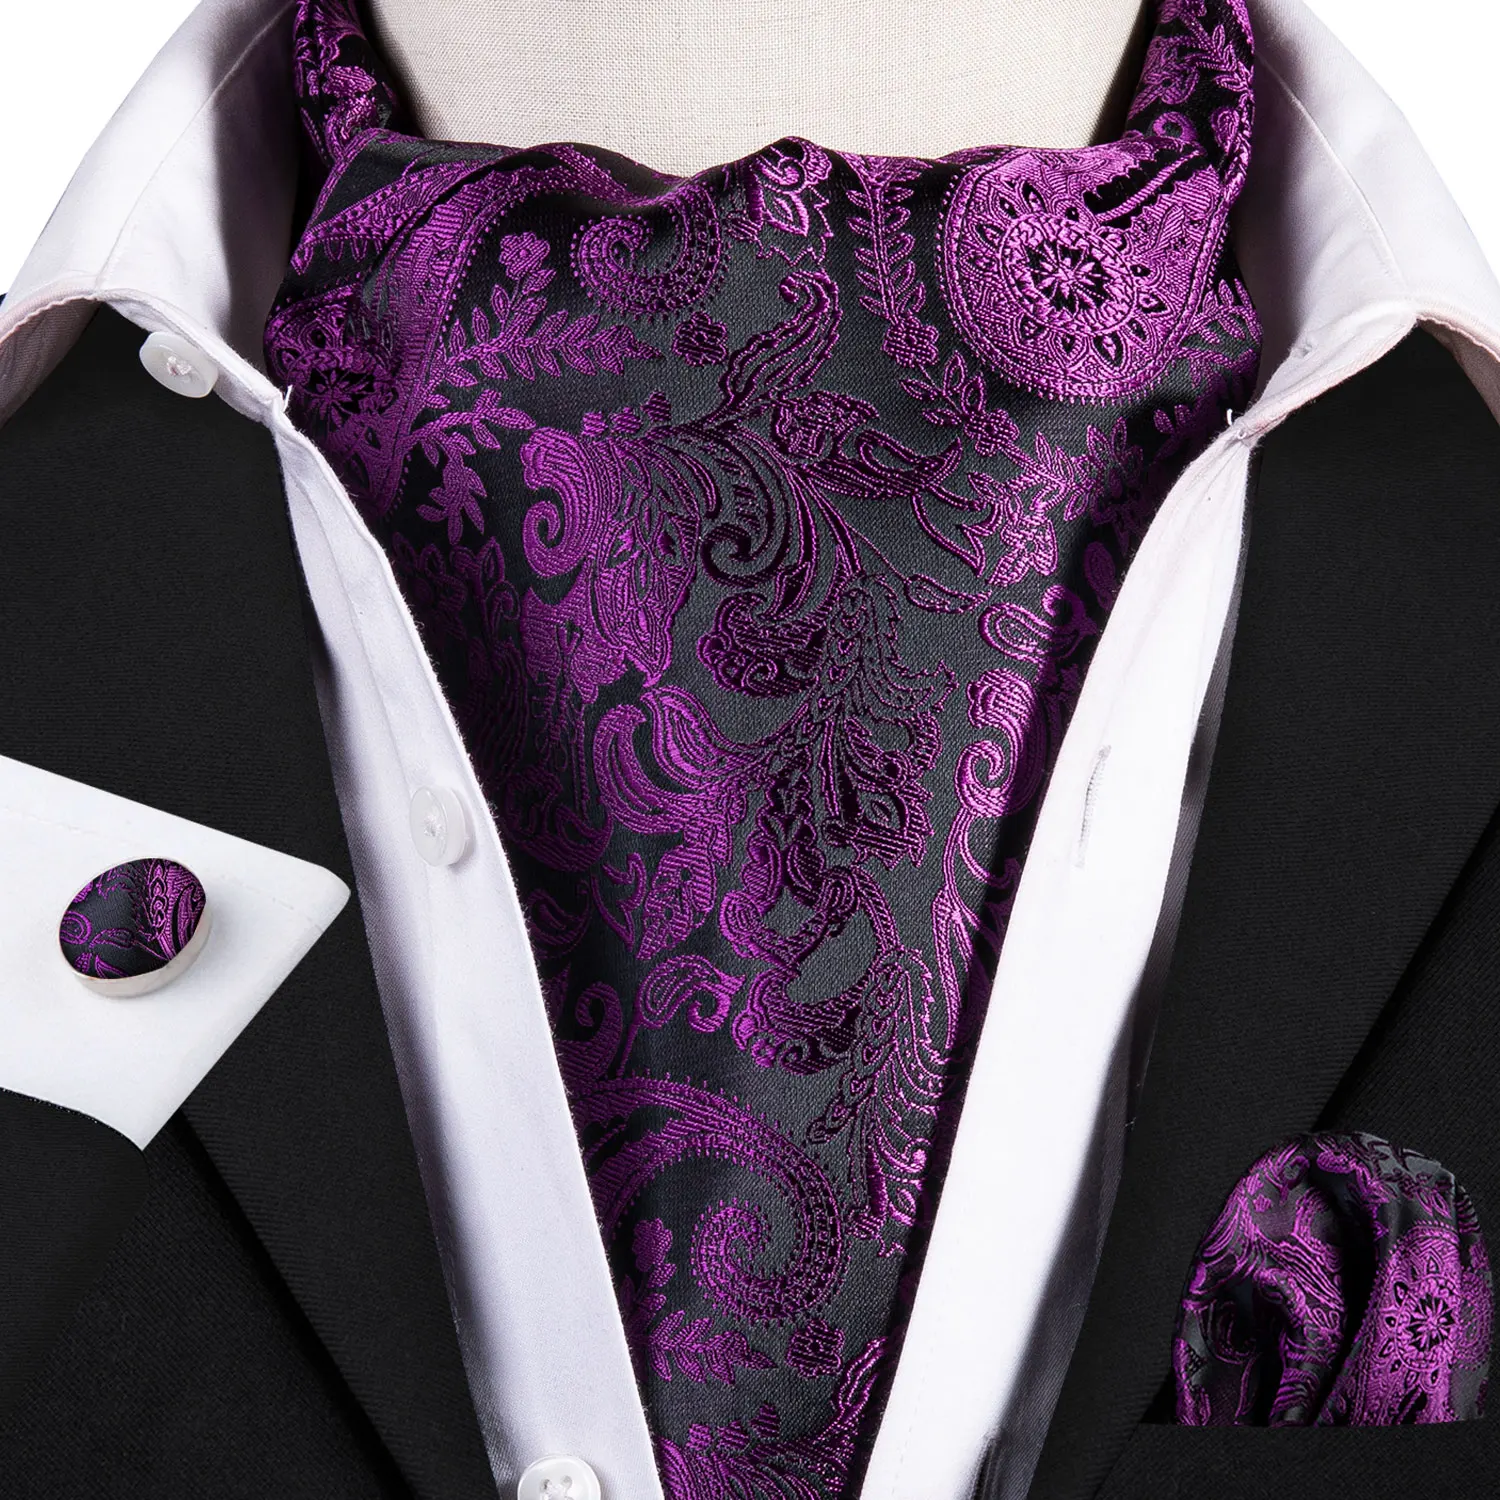 

Dark Purple Luxury Ascoat Tie For Men Retro Silk Jacquard Paisley Handkerchief Cufflinks Sets Party Wedding Barry.Wang SA-0026